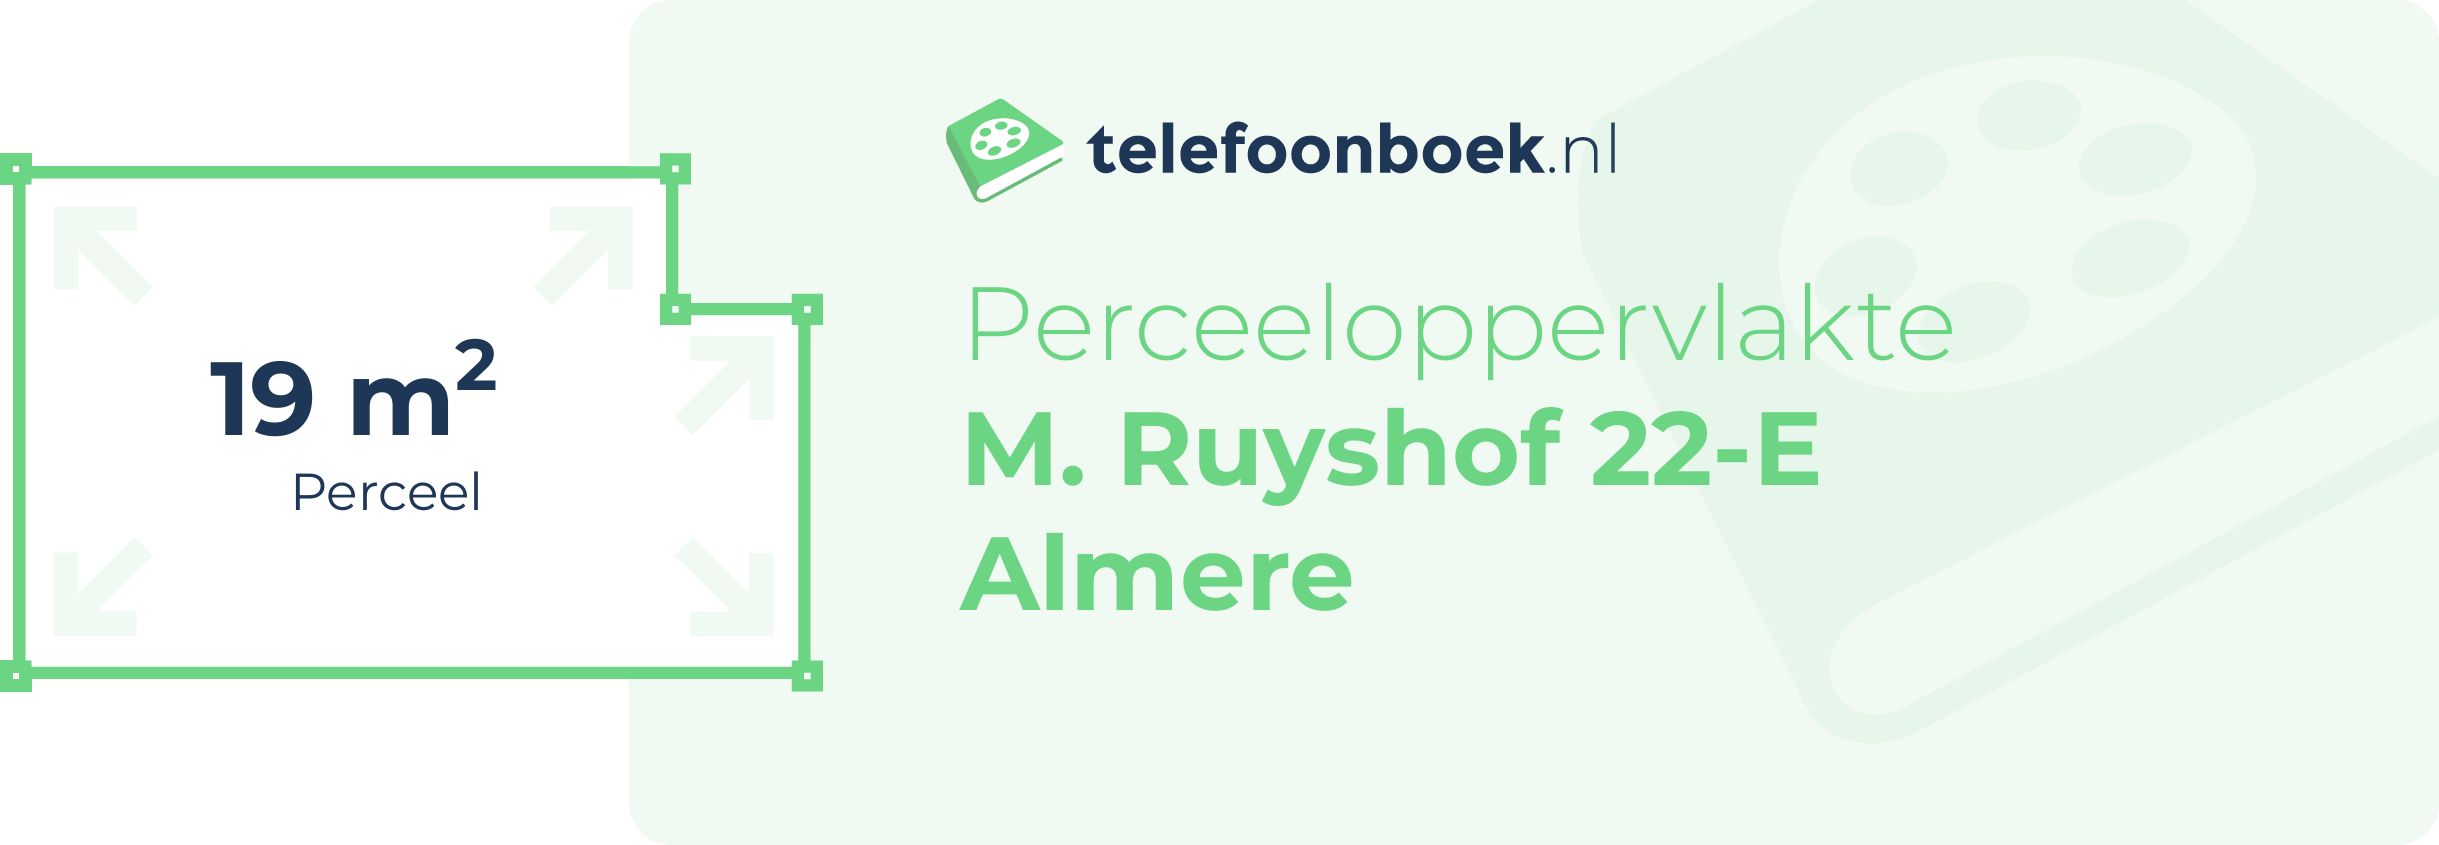 Perceeloppervlakte M. Ruyshof 22-E Almere